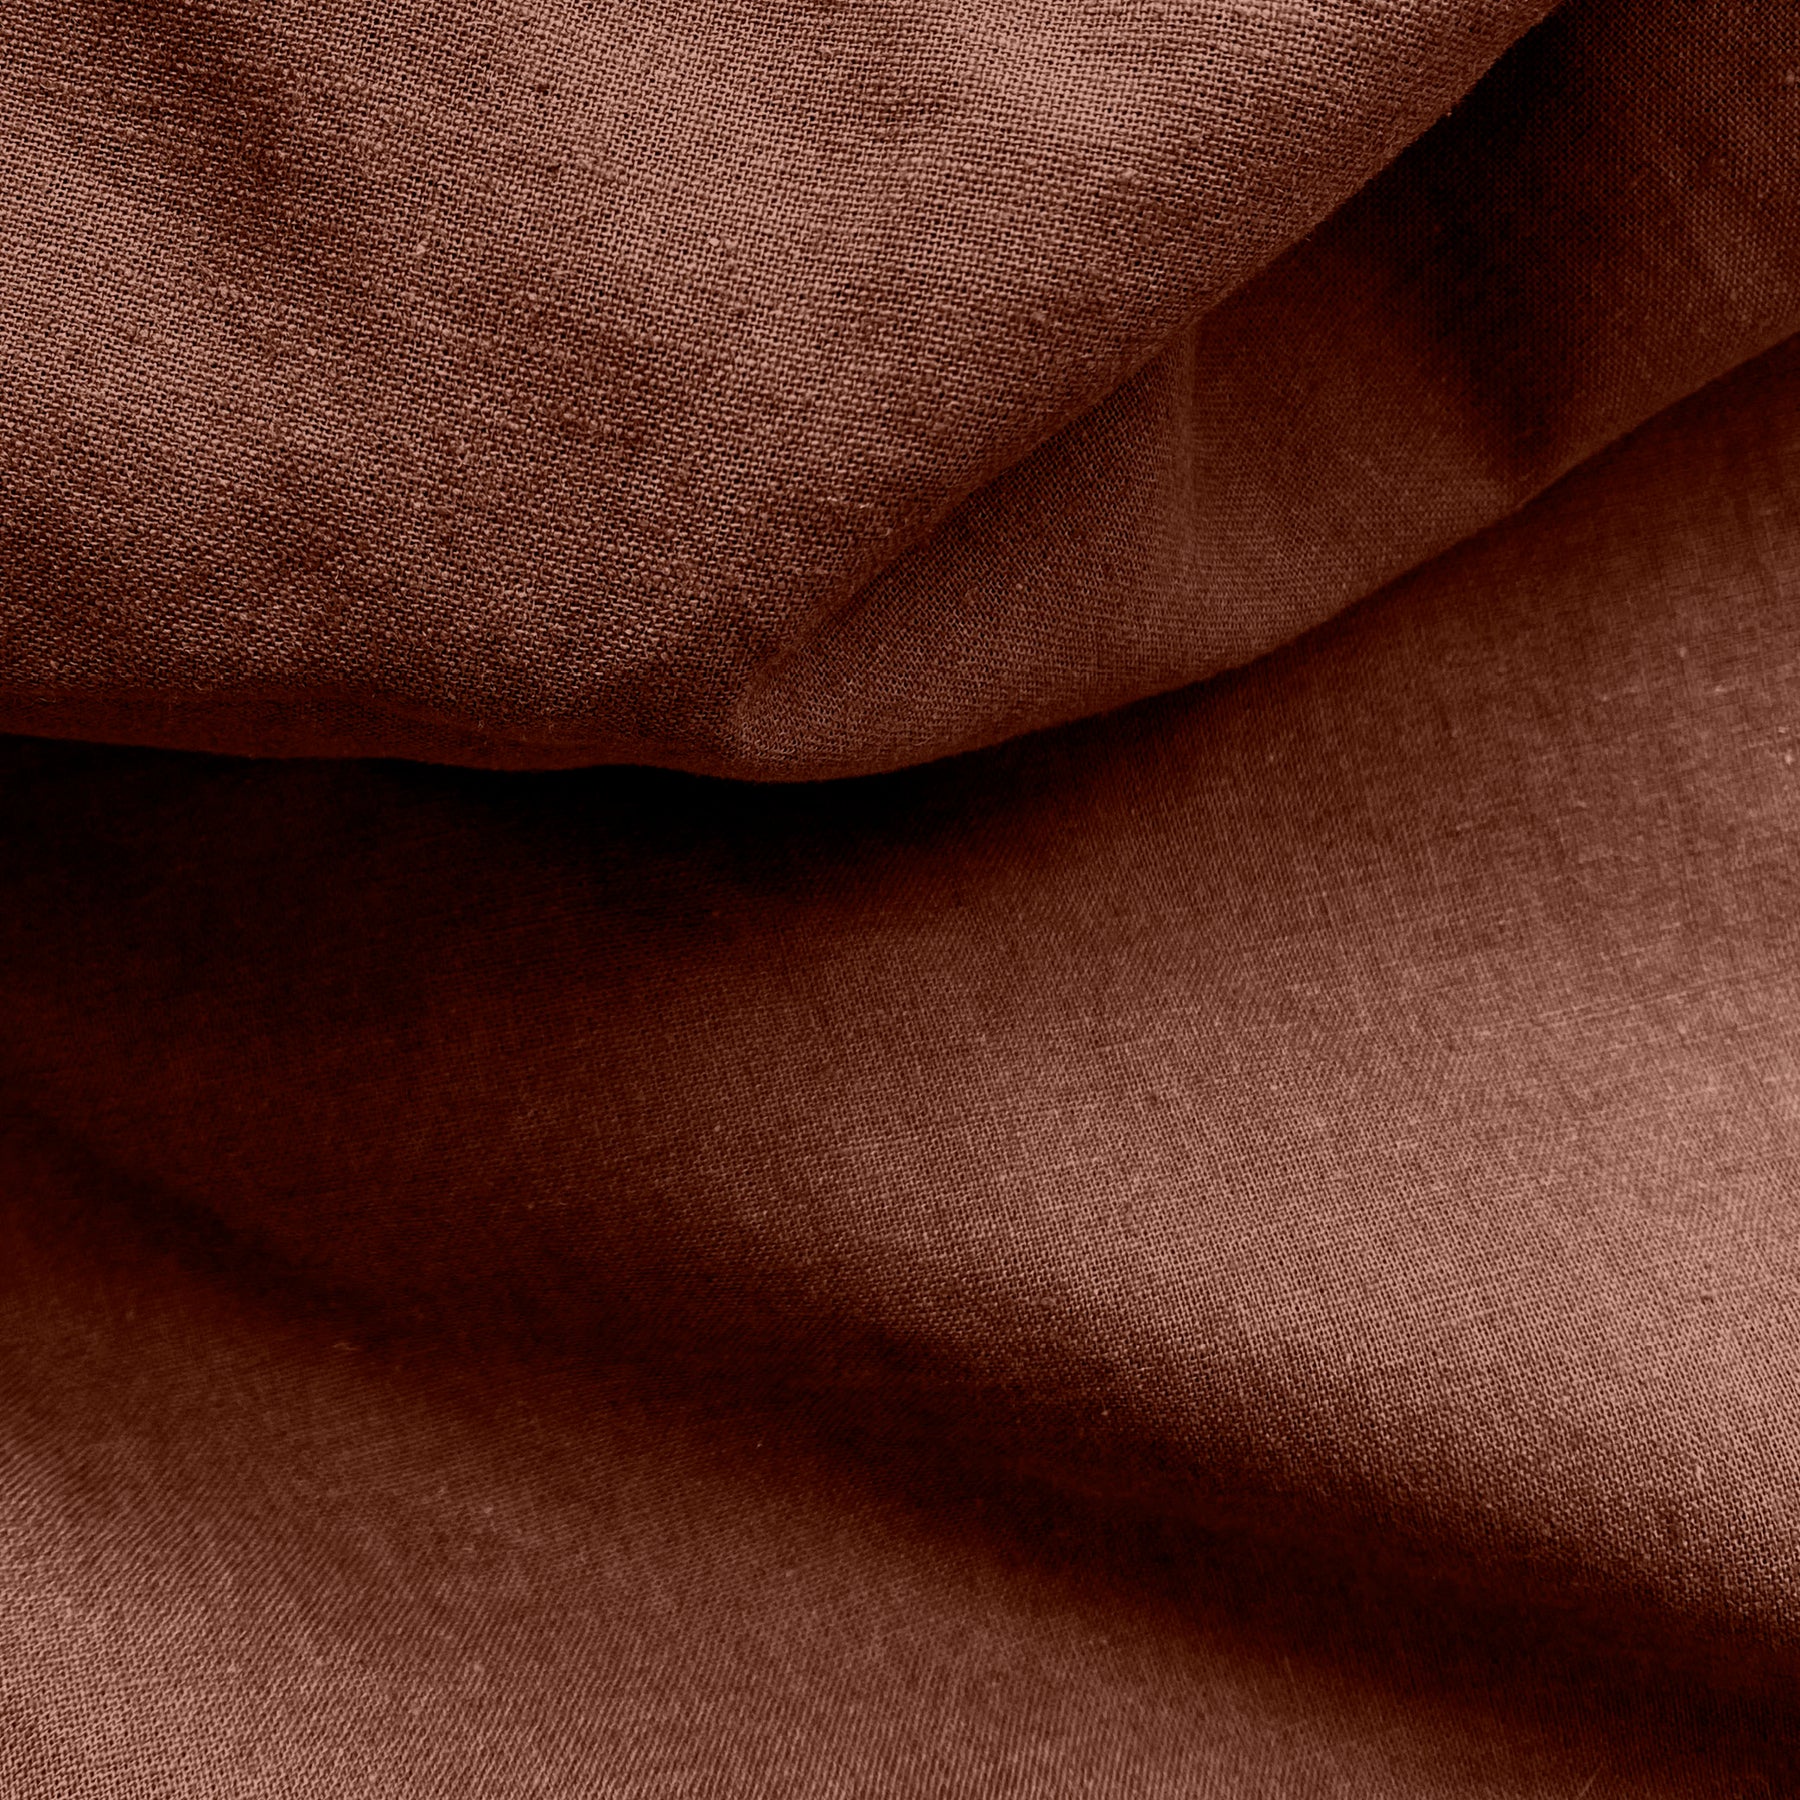 Dr. Weil Blended Linen Meditation Cushion Cover